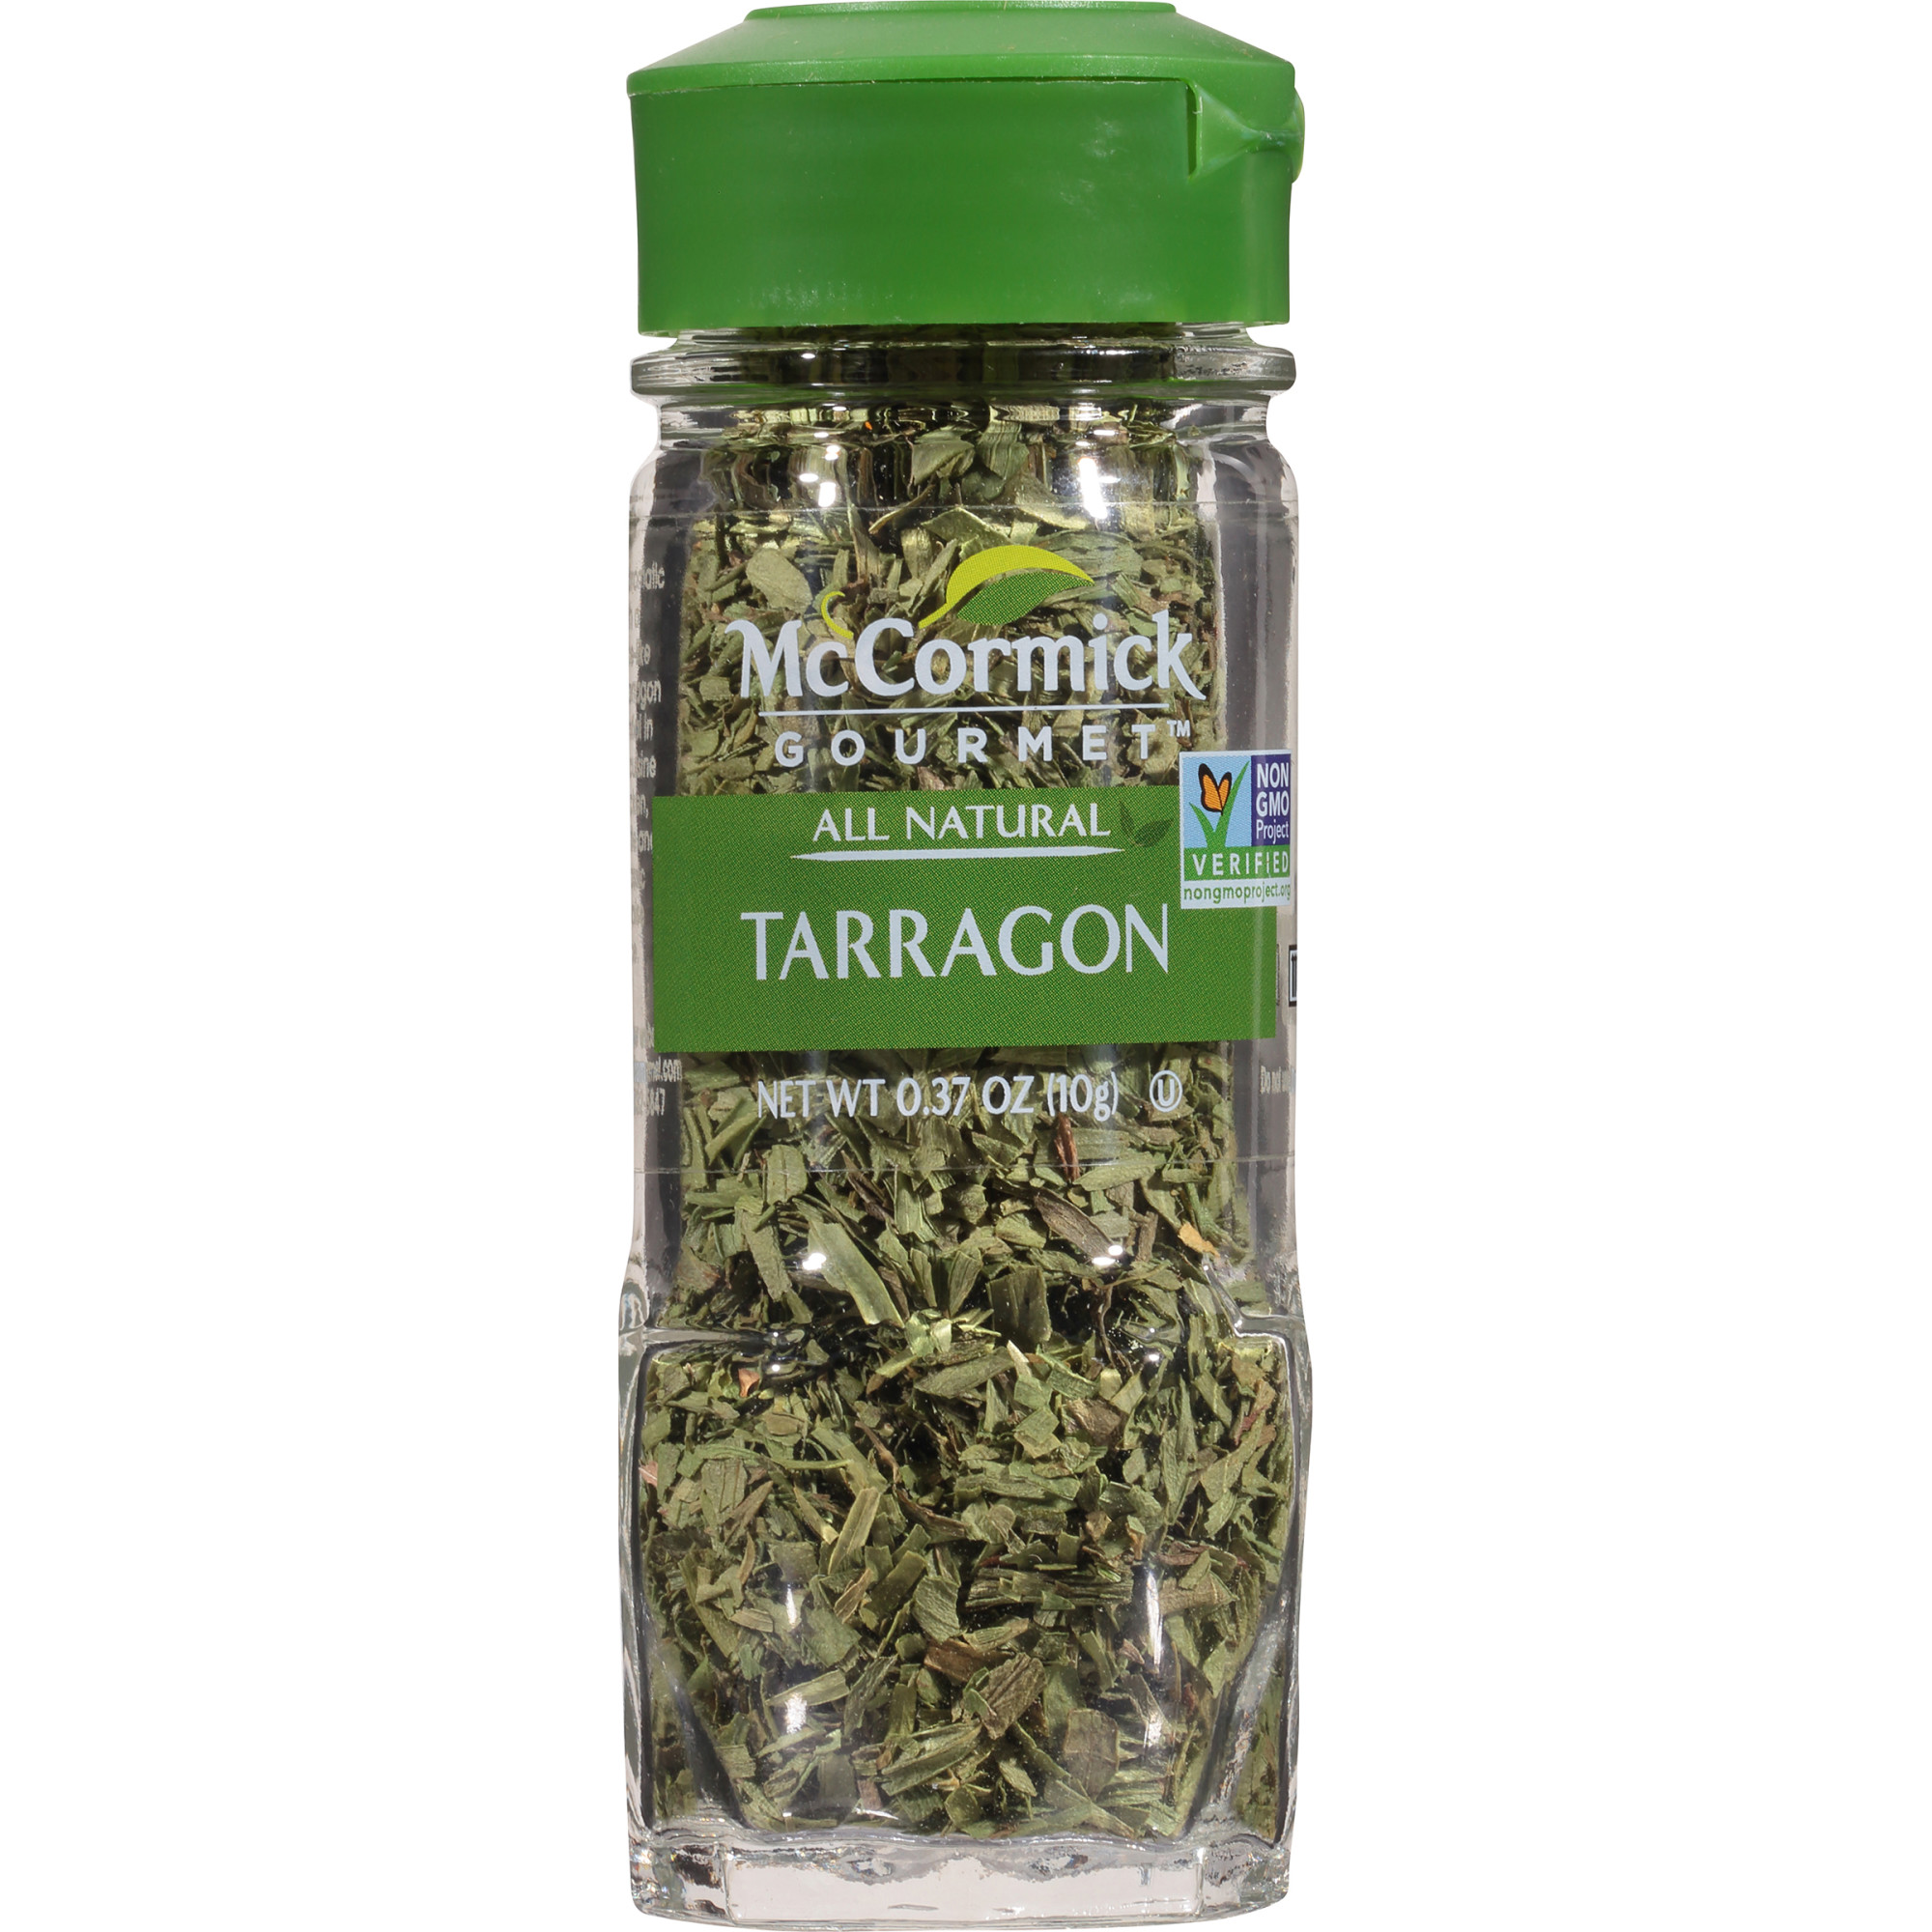 McCormick Gourmet All Natural Tarragon, 0.37 oz Mixed Spices & Seasonings - image 1 of 11